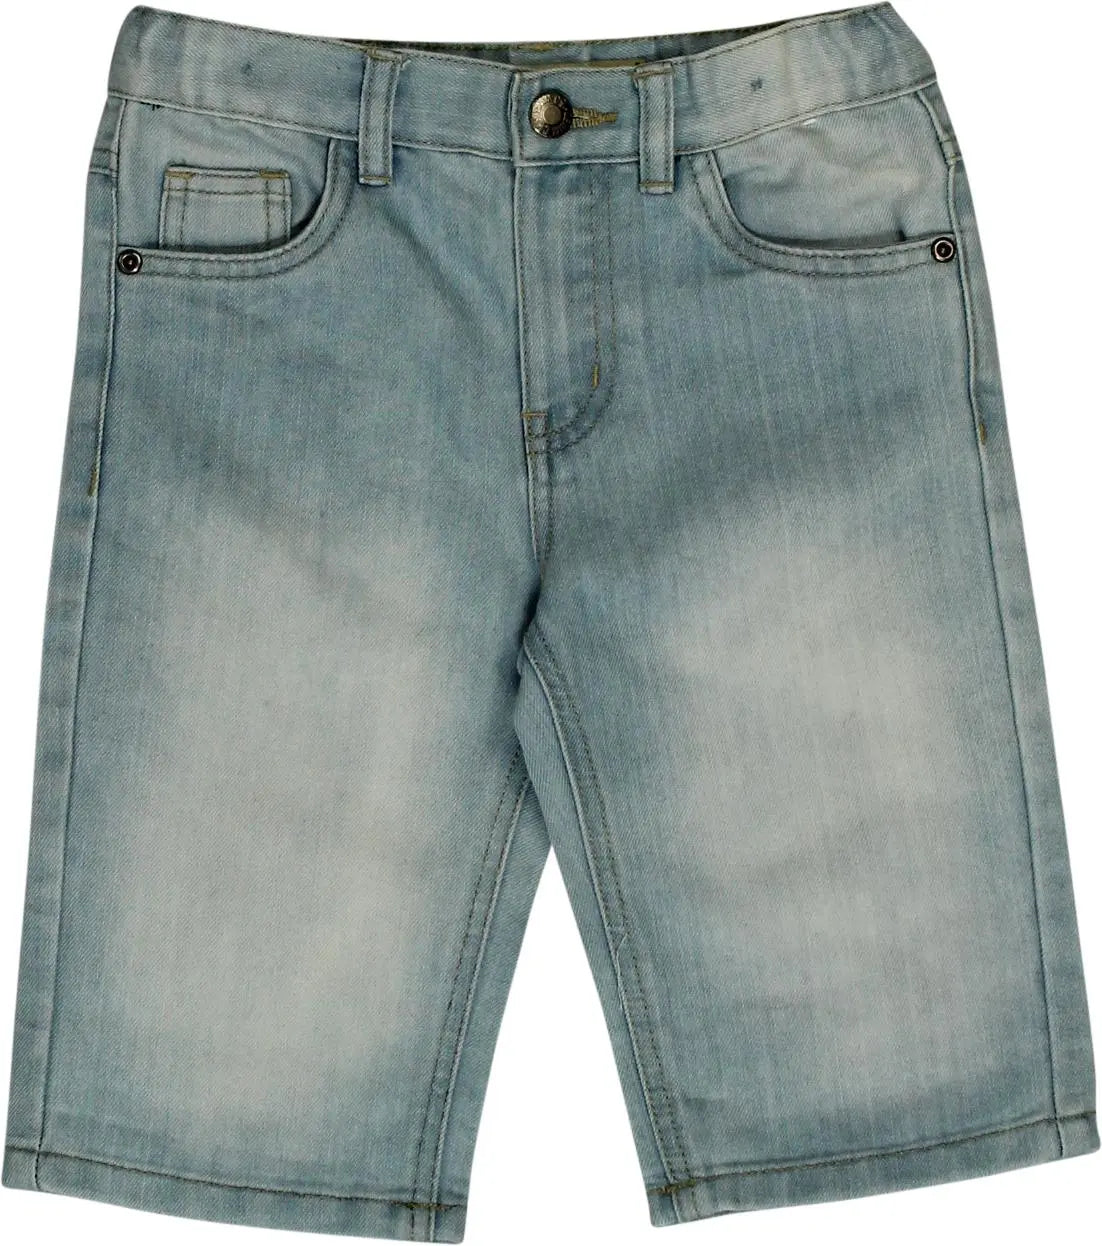 Denim Co - Denim Shorts- ThriftTale.com - Vintage and second handclothing